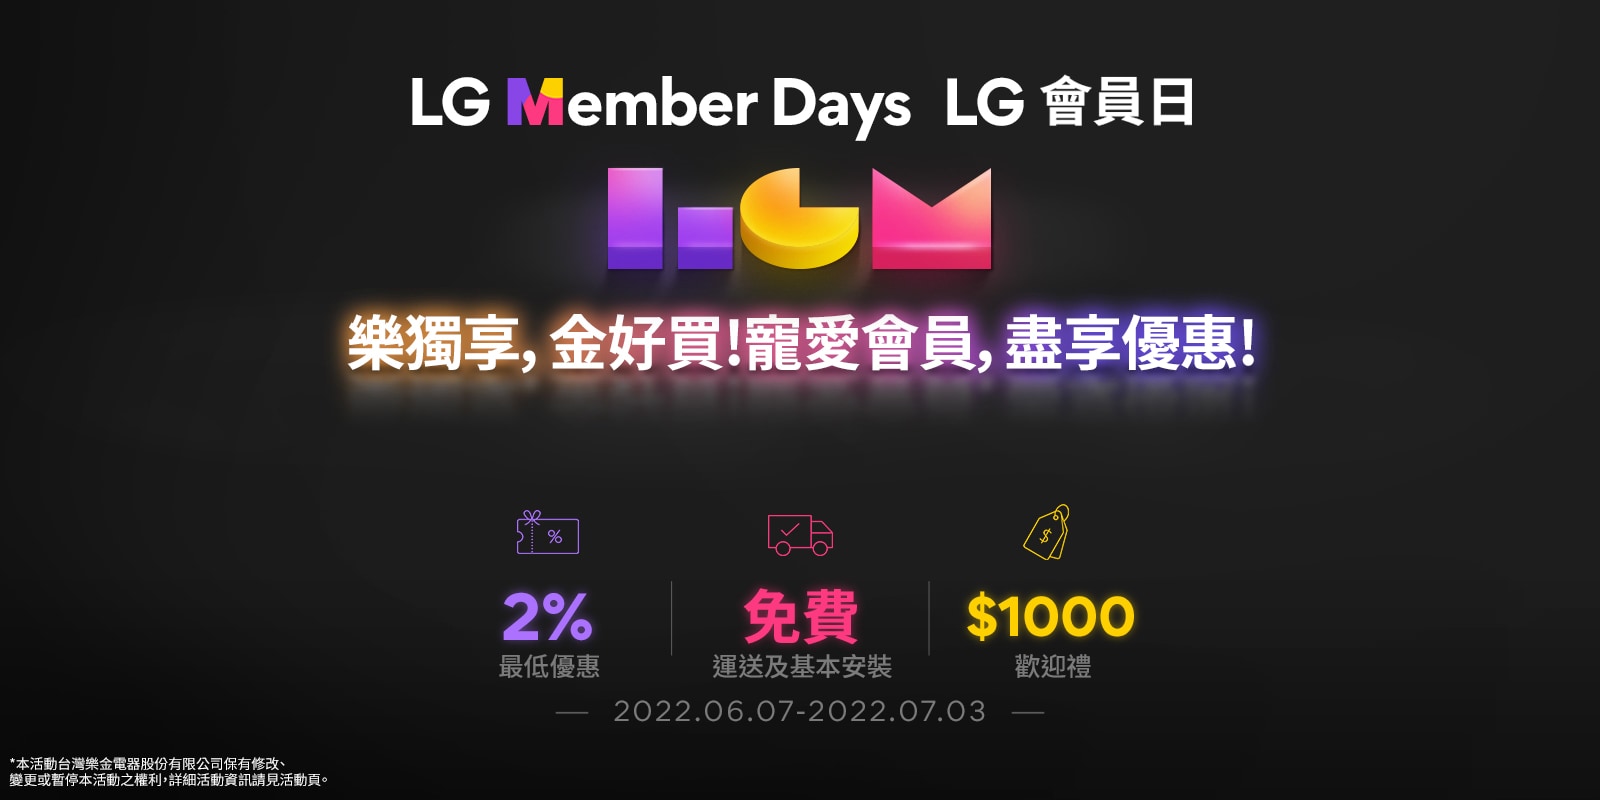 lg-memberdays-promotion-banner-1-desktop